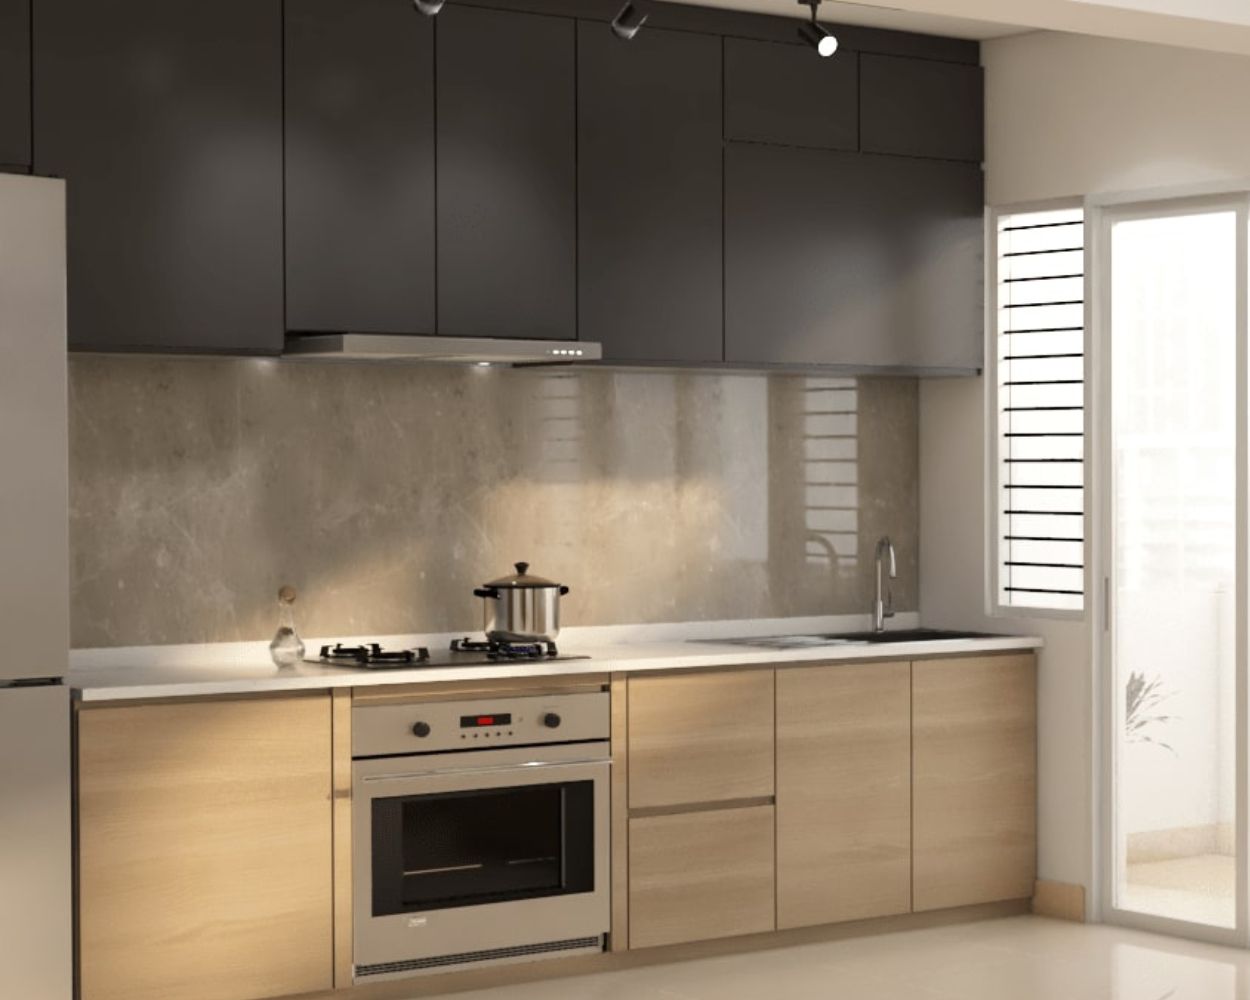 Dual-Tone Contemporary Laminate Design For Kitchen Cabinets